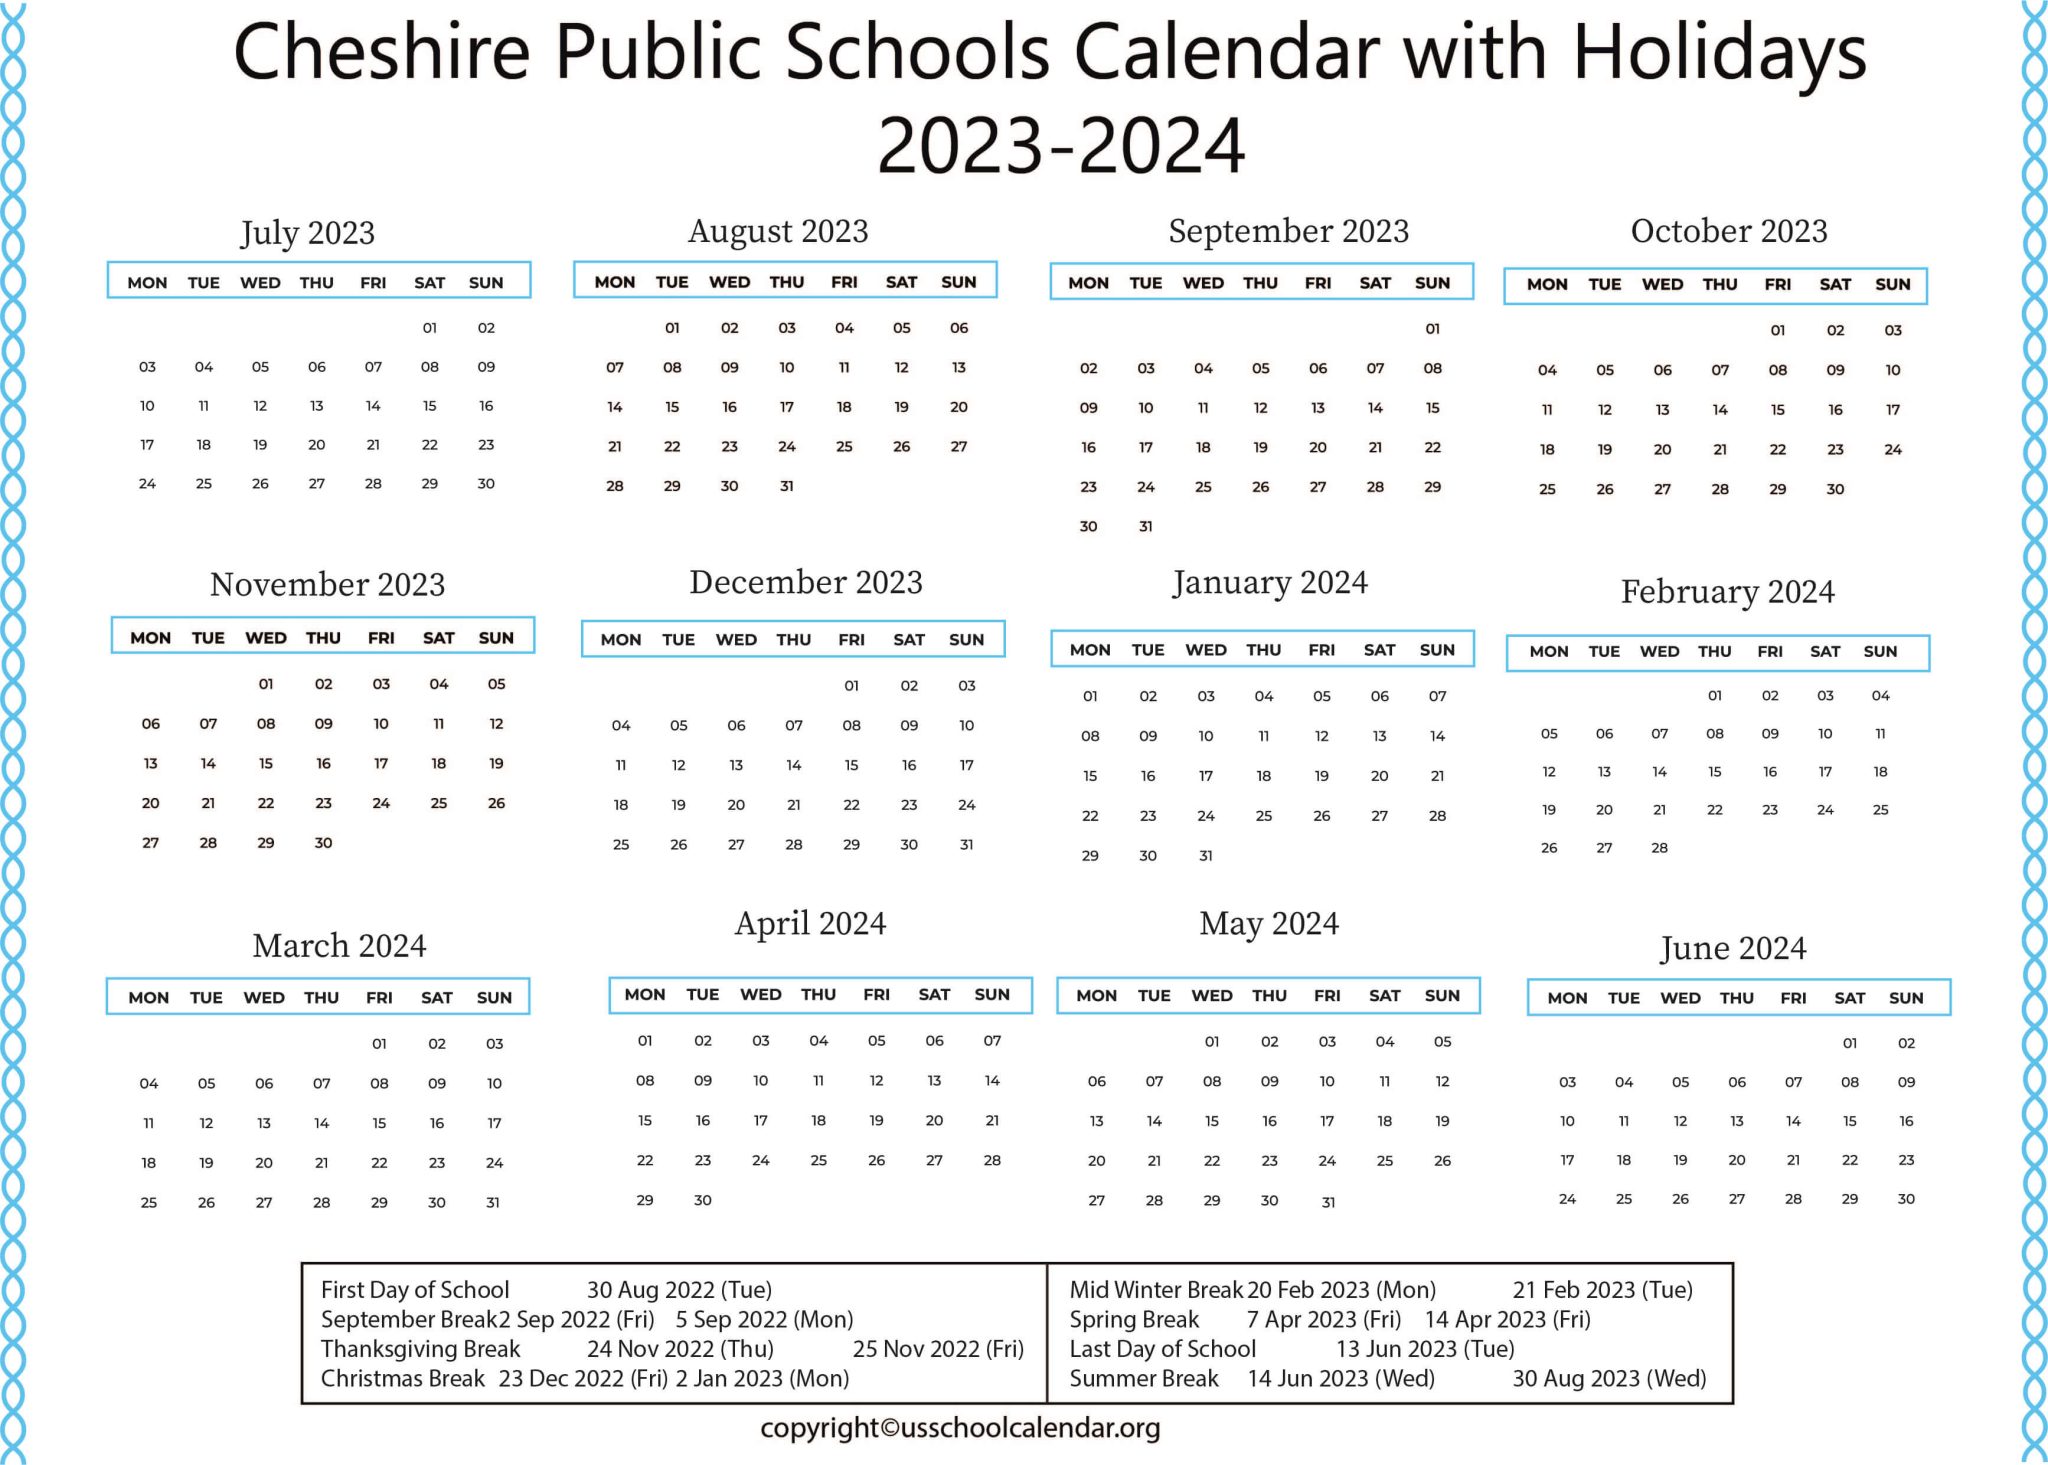 cheshire-public-schools-calendar-with-holidays-2023-2024